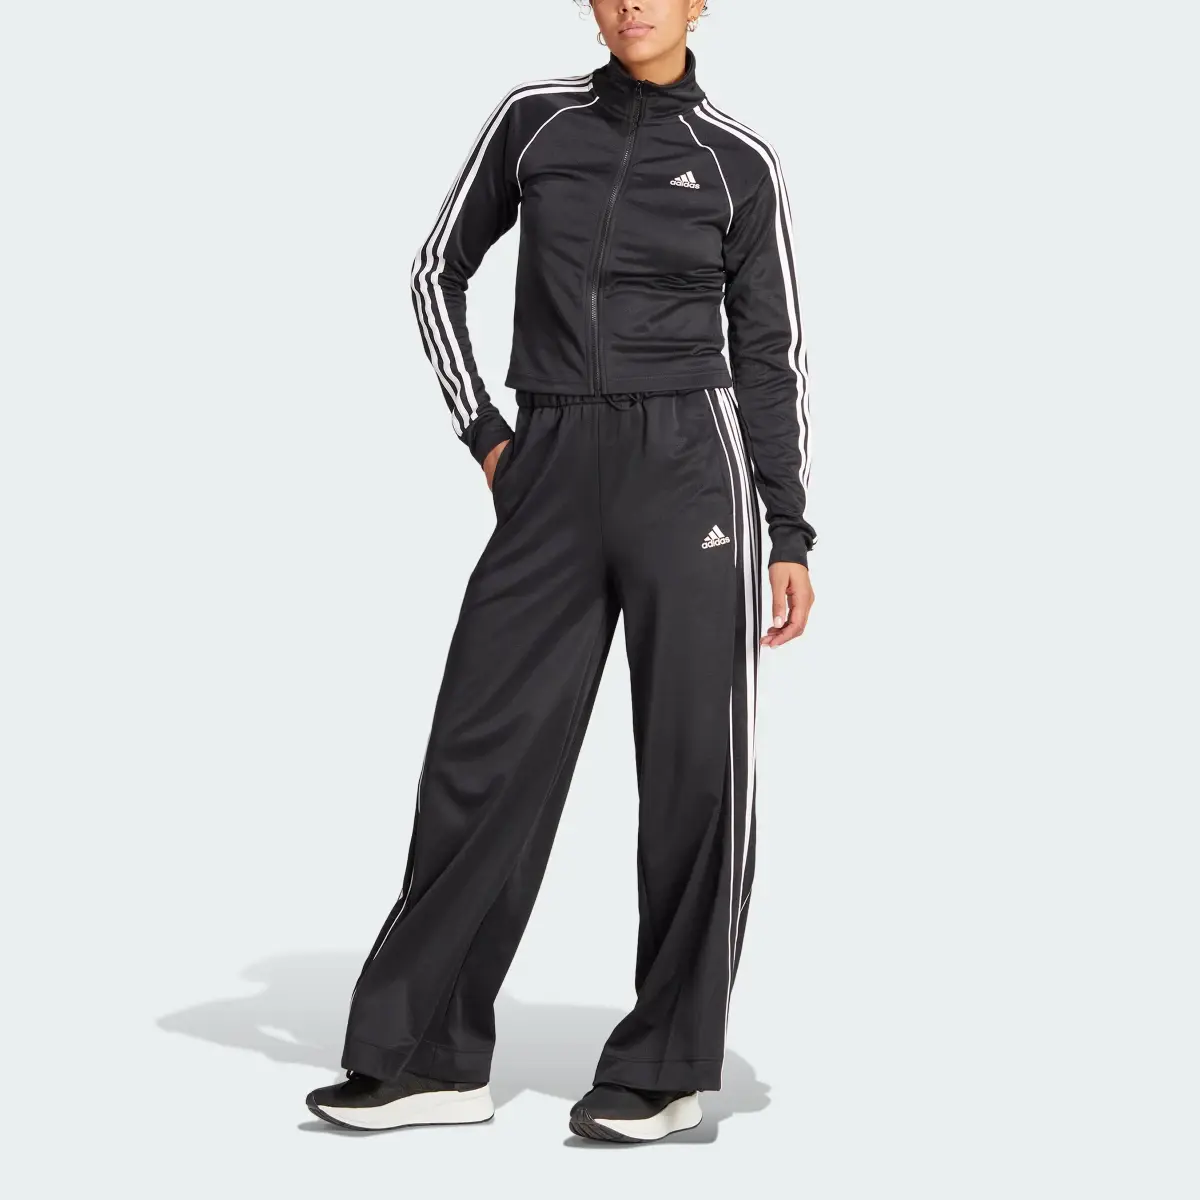 Adidas Teamsport Track Suit. 1